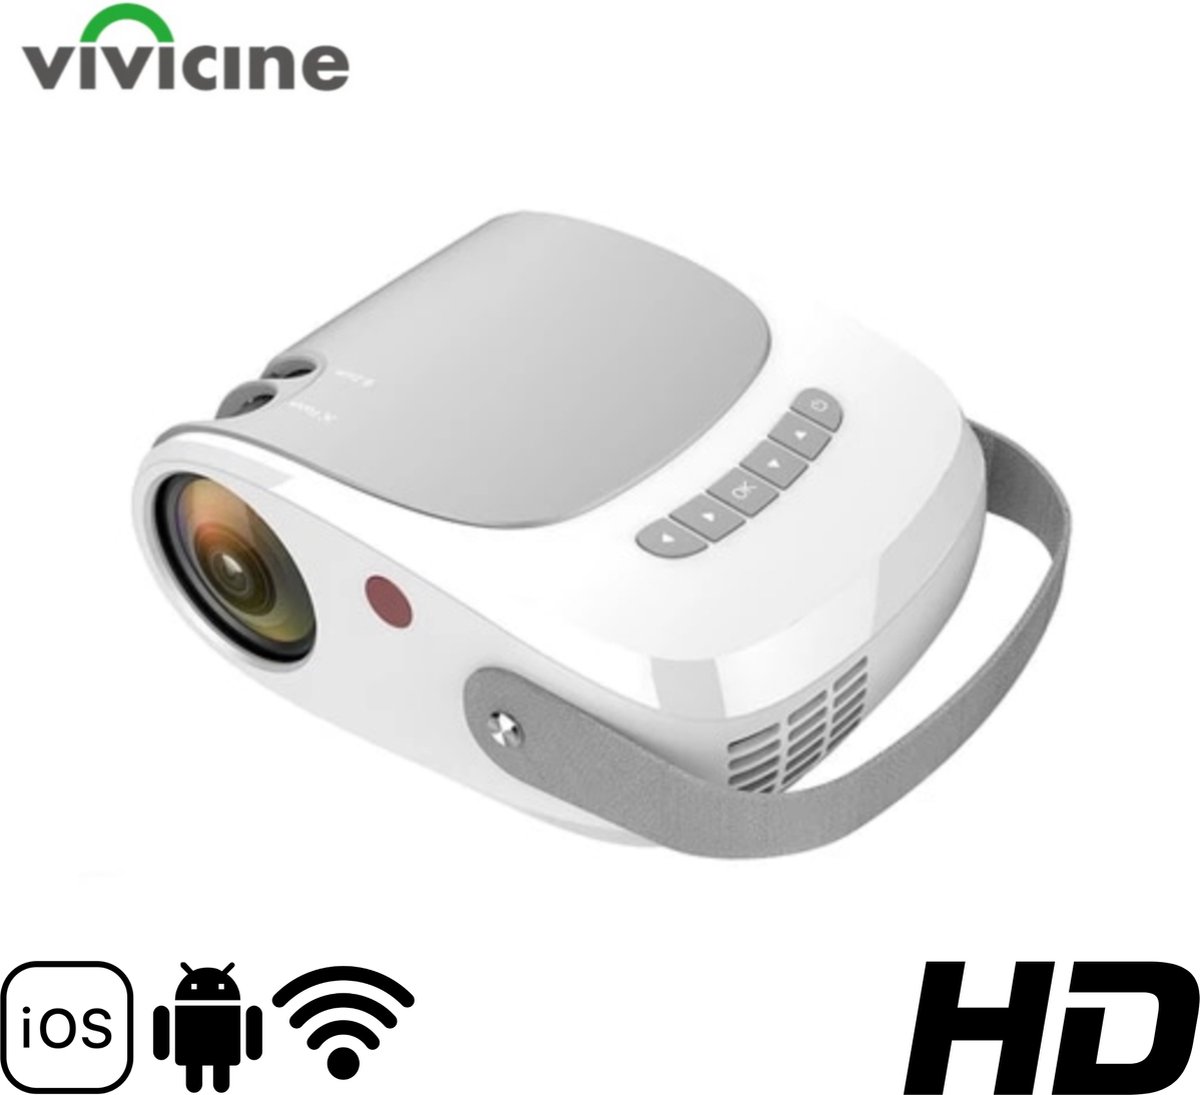 Vivicine Mini Beamer - Mini Projector - Beamer - 120 inch - Android en iOS - WiFi - Projecteer Vanaf Telefoon - Ingebouwde Luidspreker - 3600 Lumen - 60W - Wit